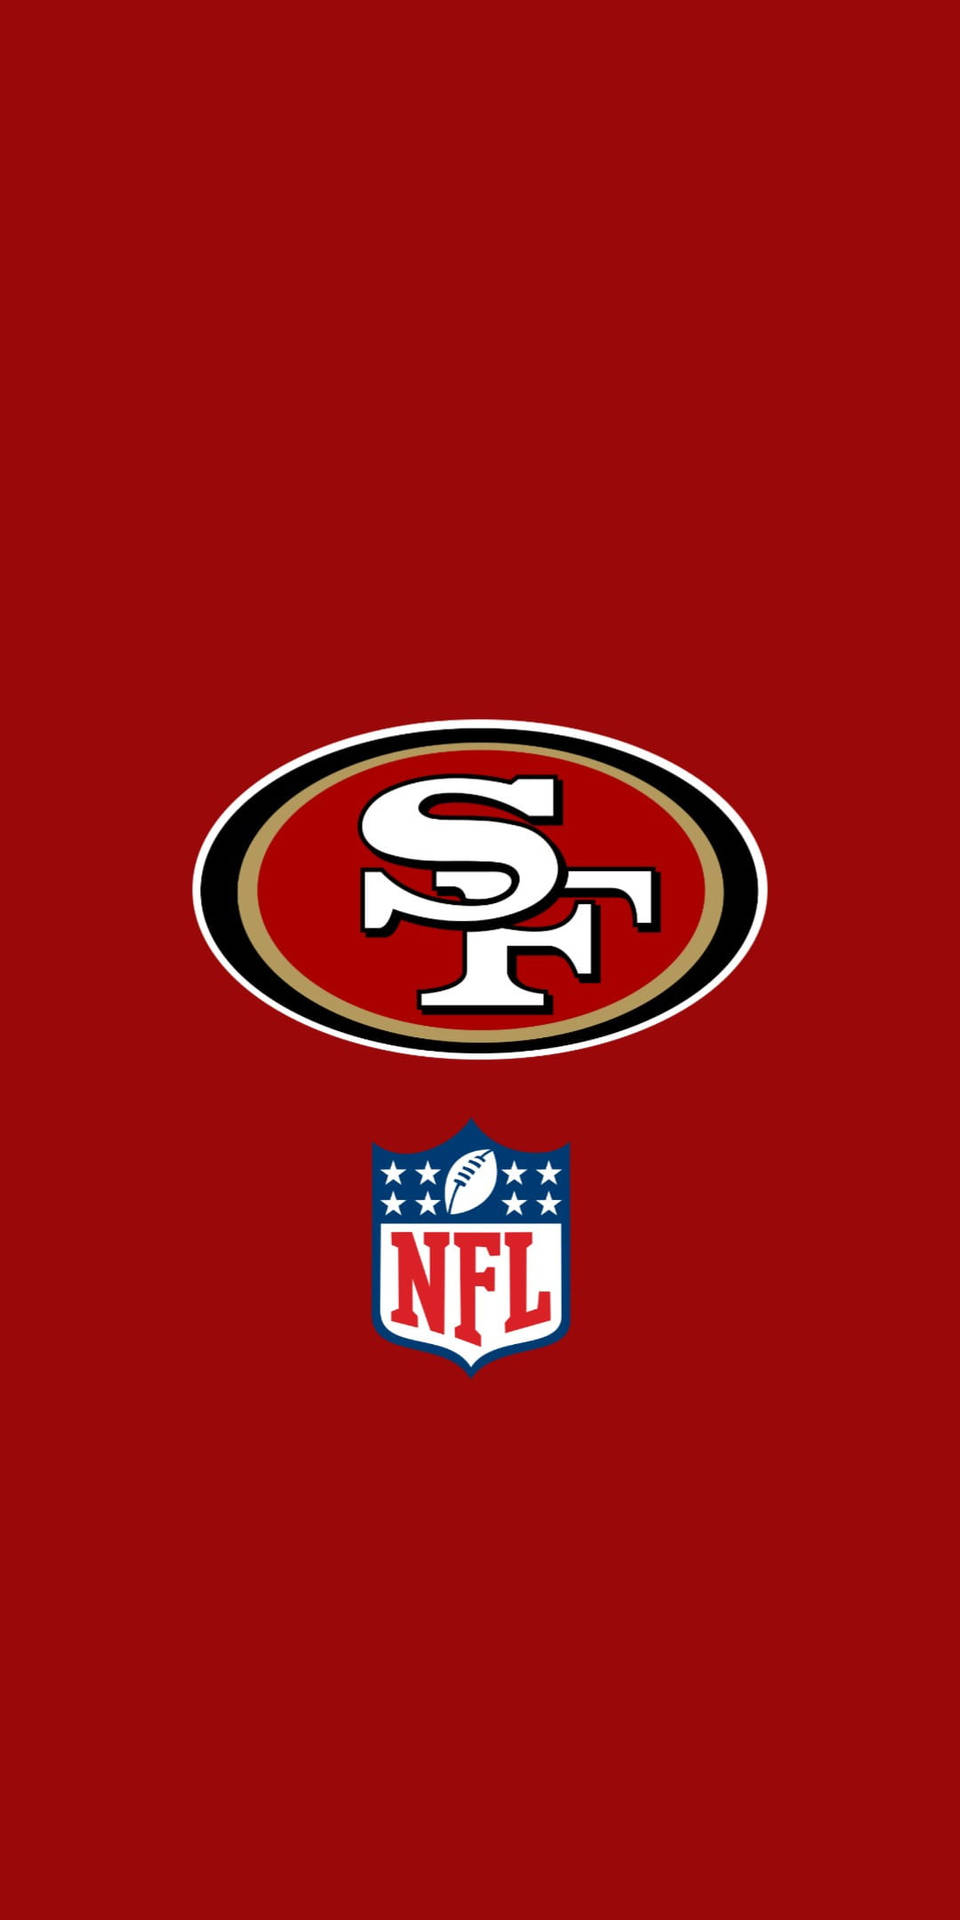 Simple SF 49ers NFL Team Logo Wallpaper